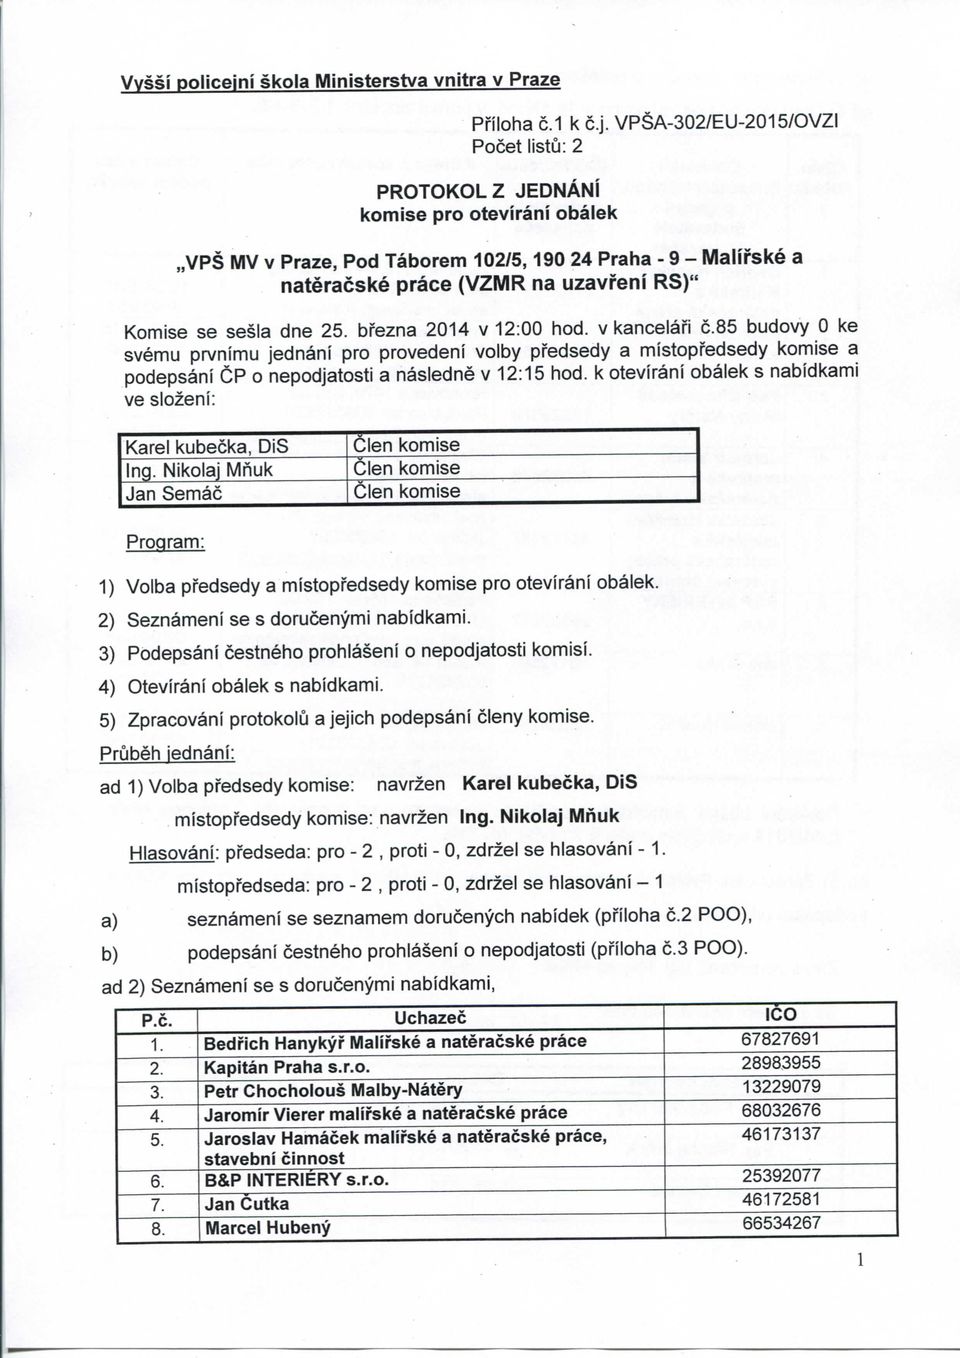 VPSA-302/EU-2015/OVZI Pocet listu: 2 PROTOKOLZ JEDNANi komise pro otevirani obaiek VPS MV V Praze, Pod Taborem 102/5,190 24 Praha - 9 - Malifske a (VZMR na uzavfeni RS)" Komise se sesia dne 25.